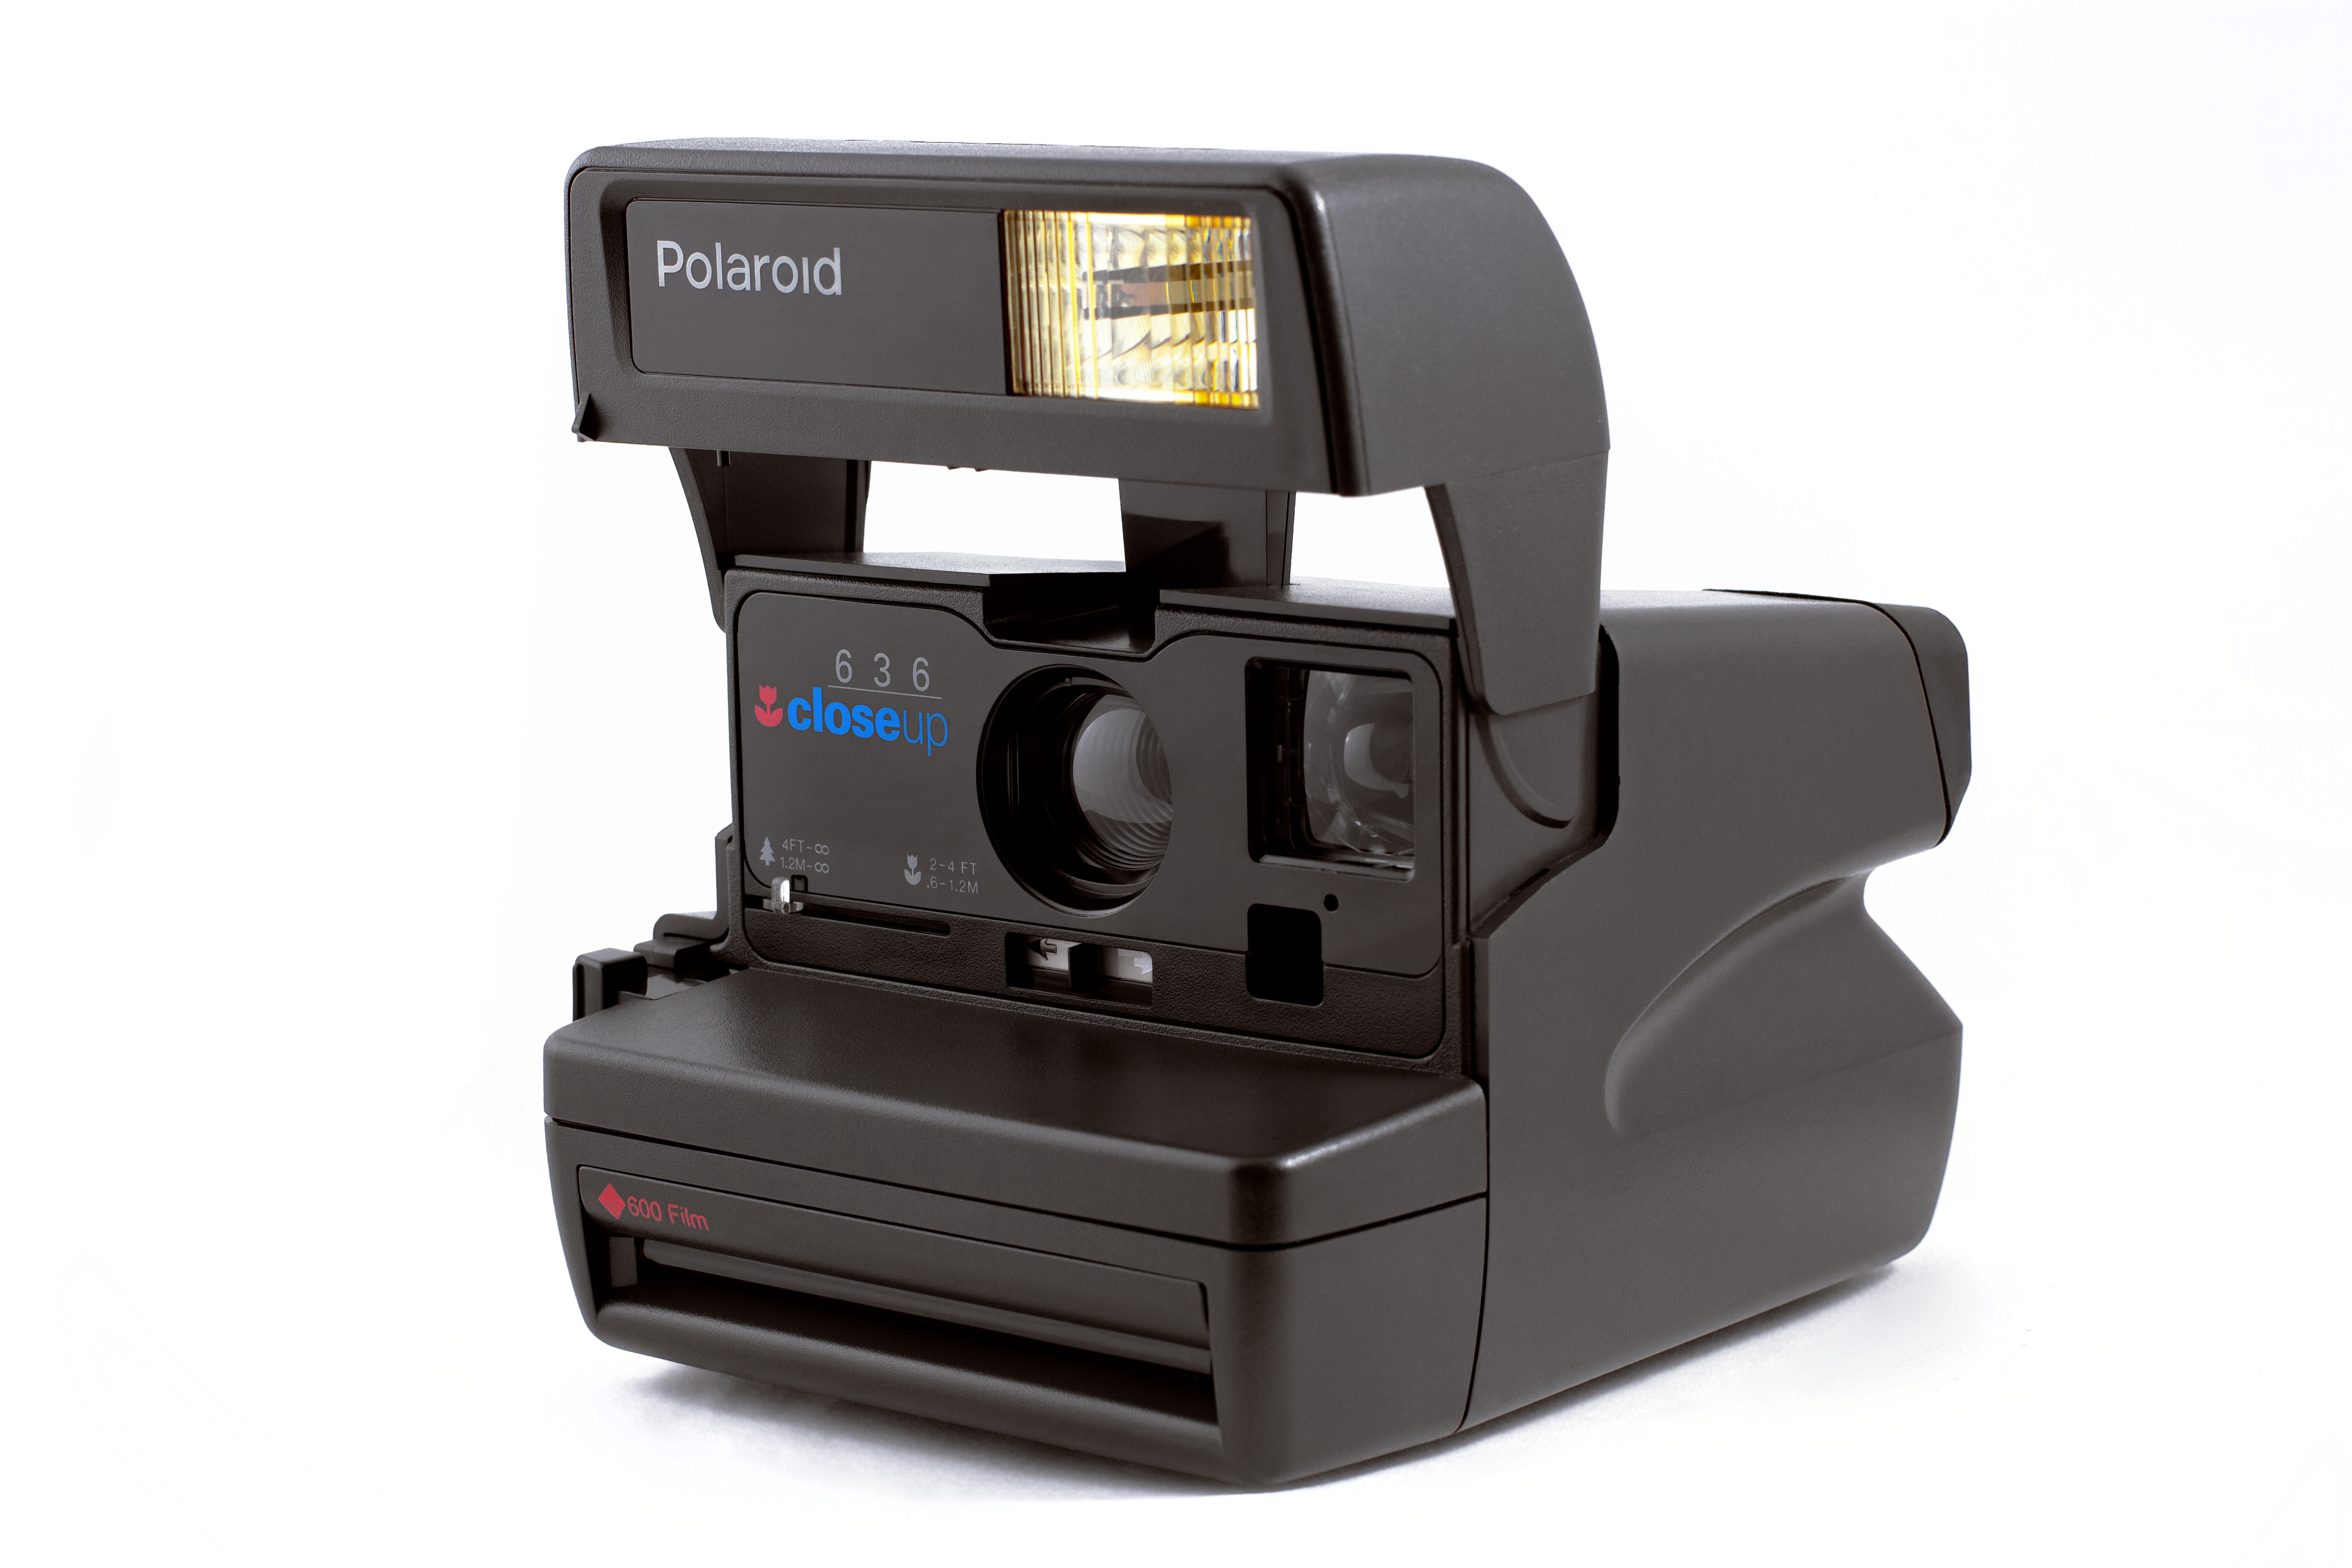 File:Polaroid Up instant camera.jpg - Wikimedia